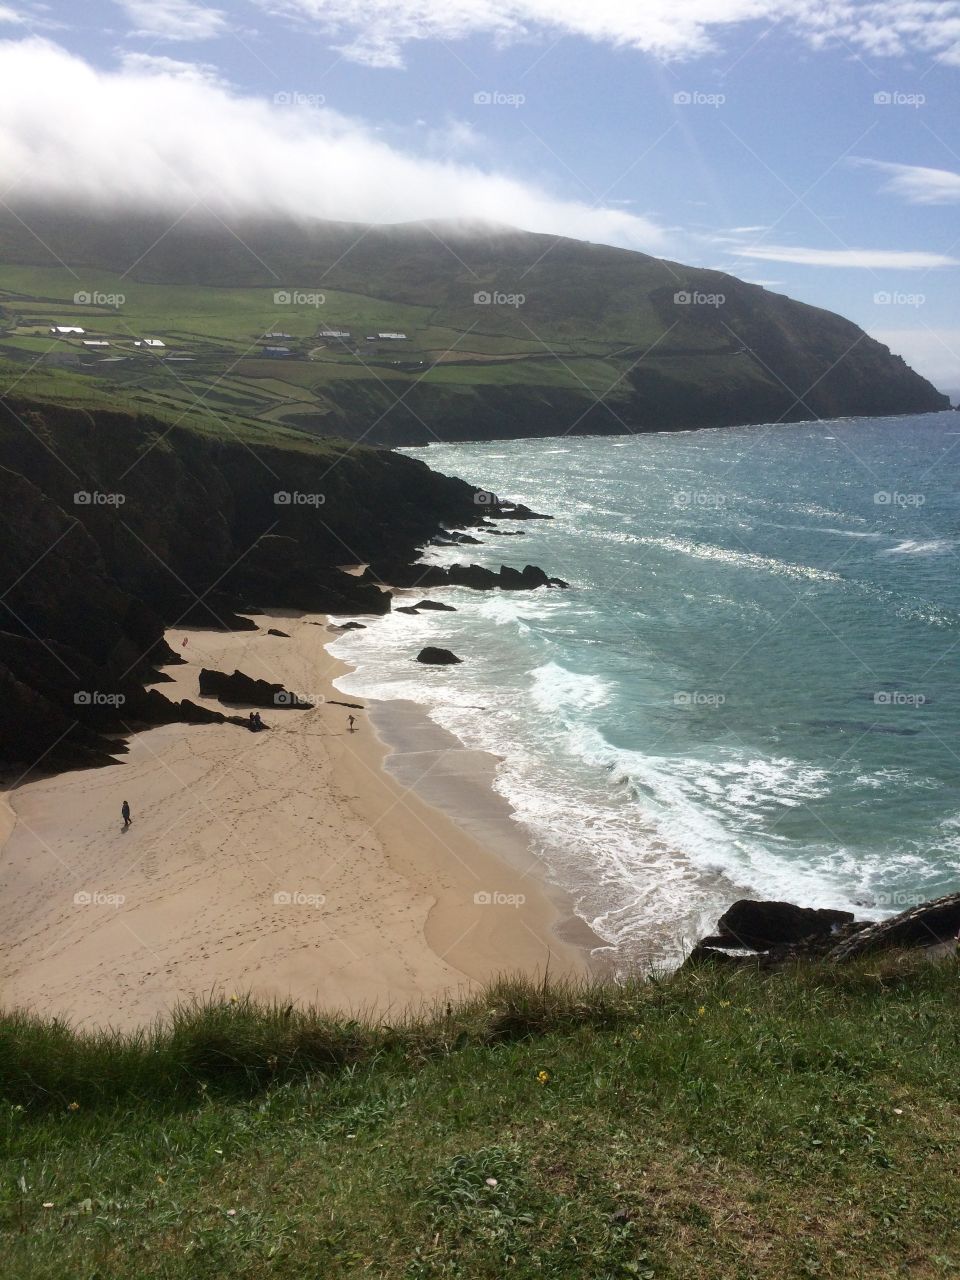 Beaches along the dingle peninsula on the Irish coast 